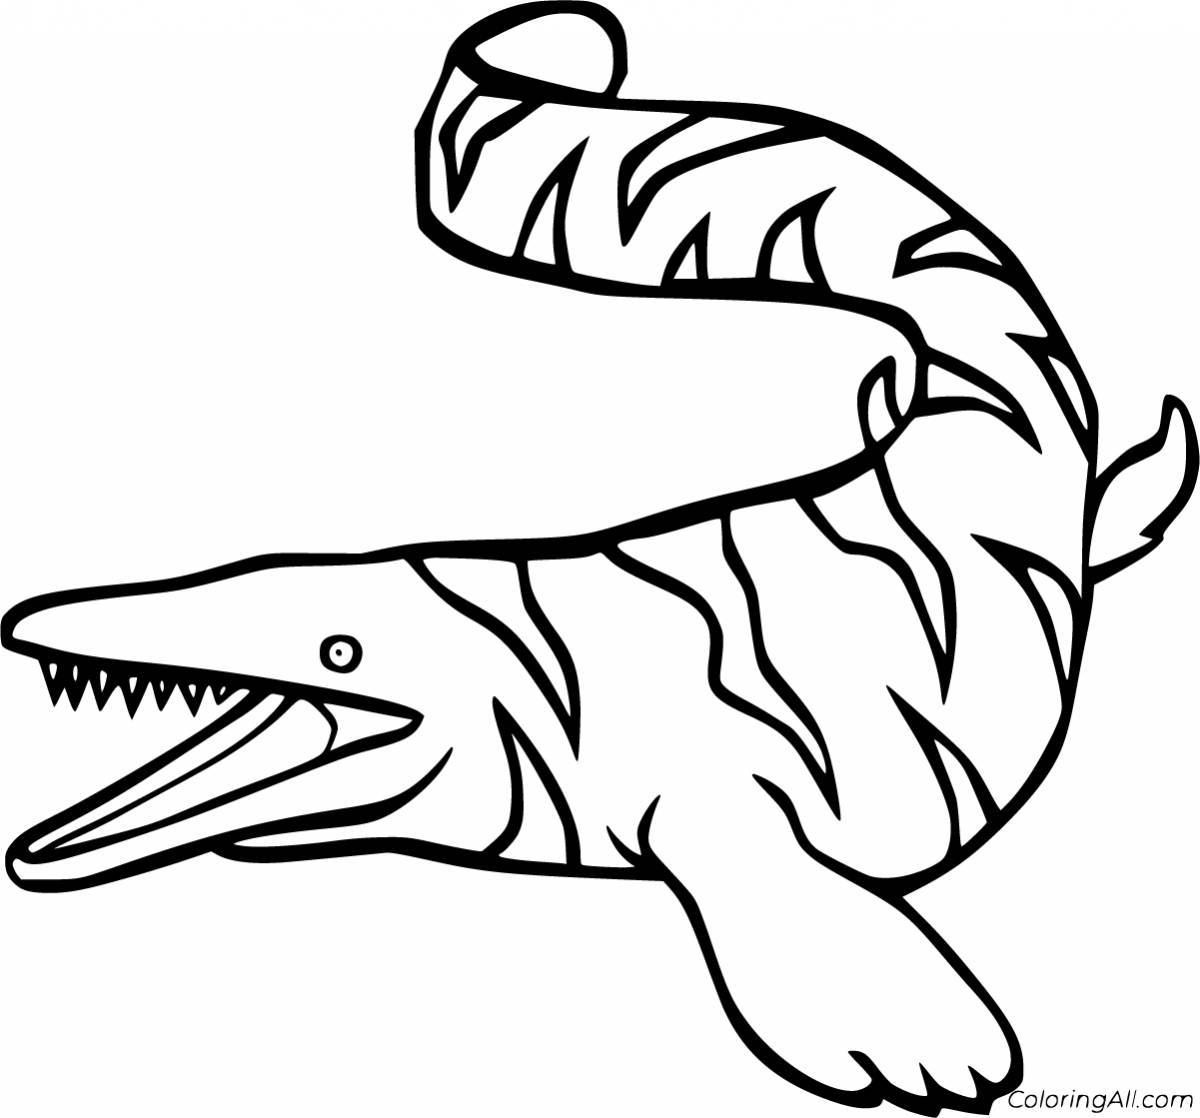 Unique mosasaurus coloring page